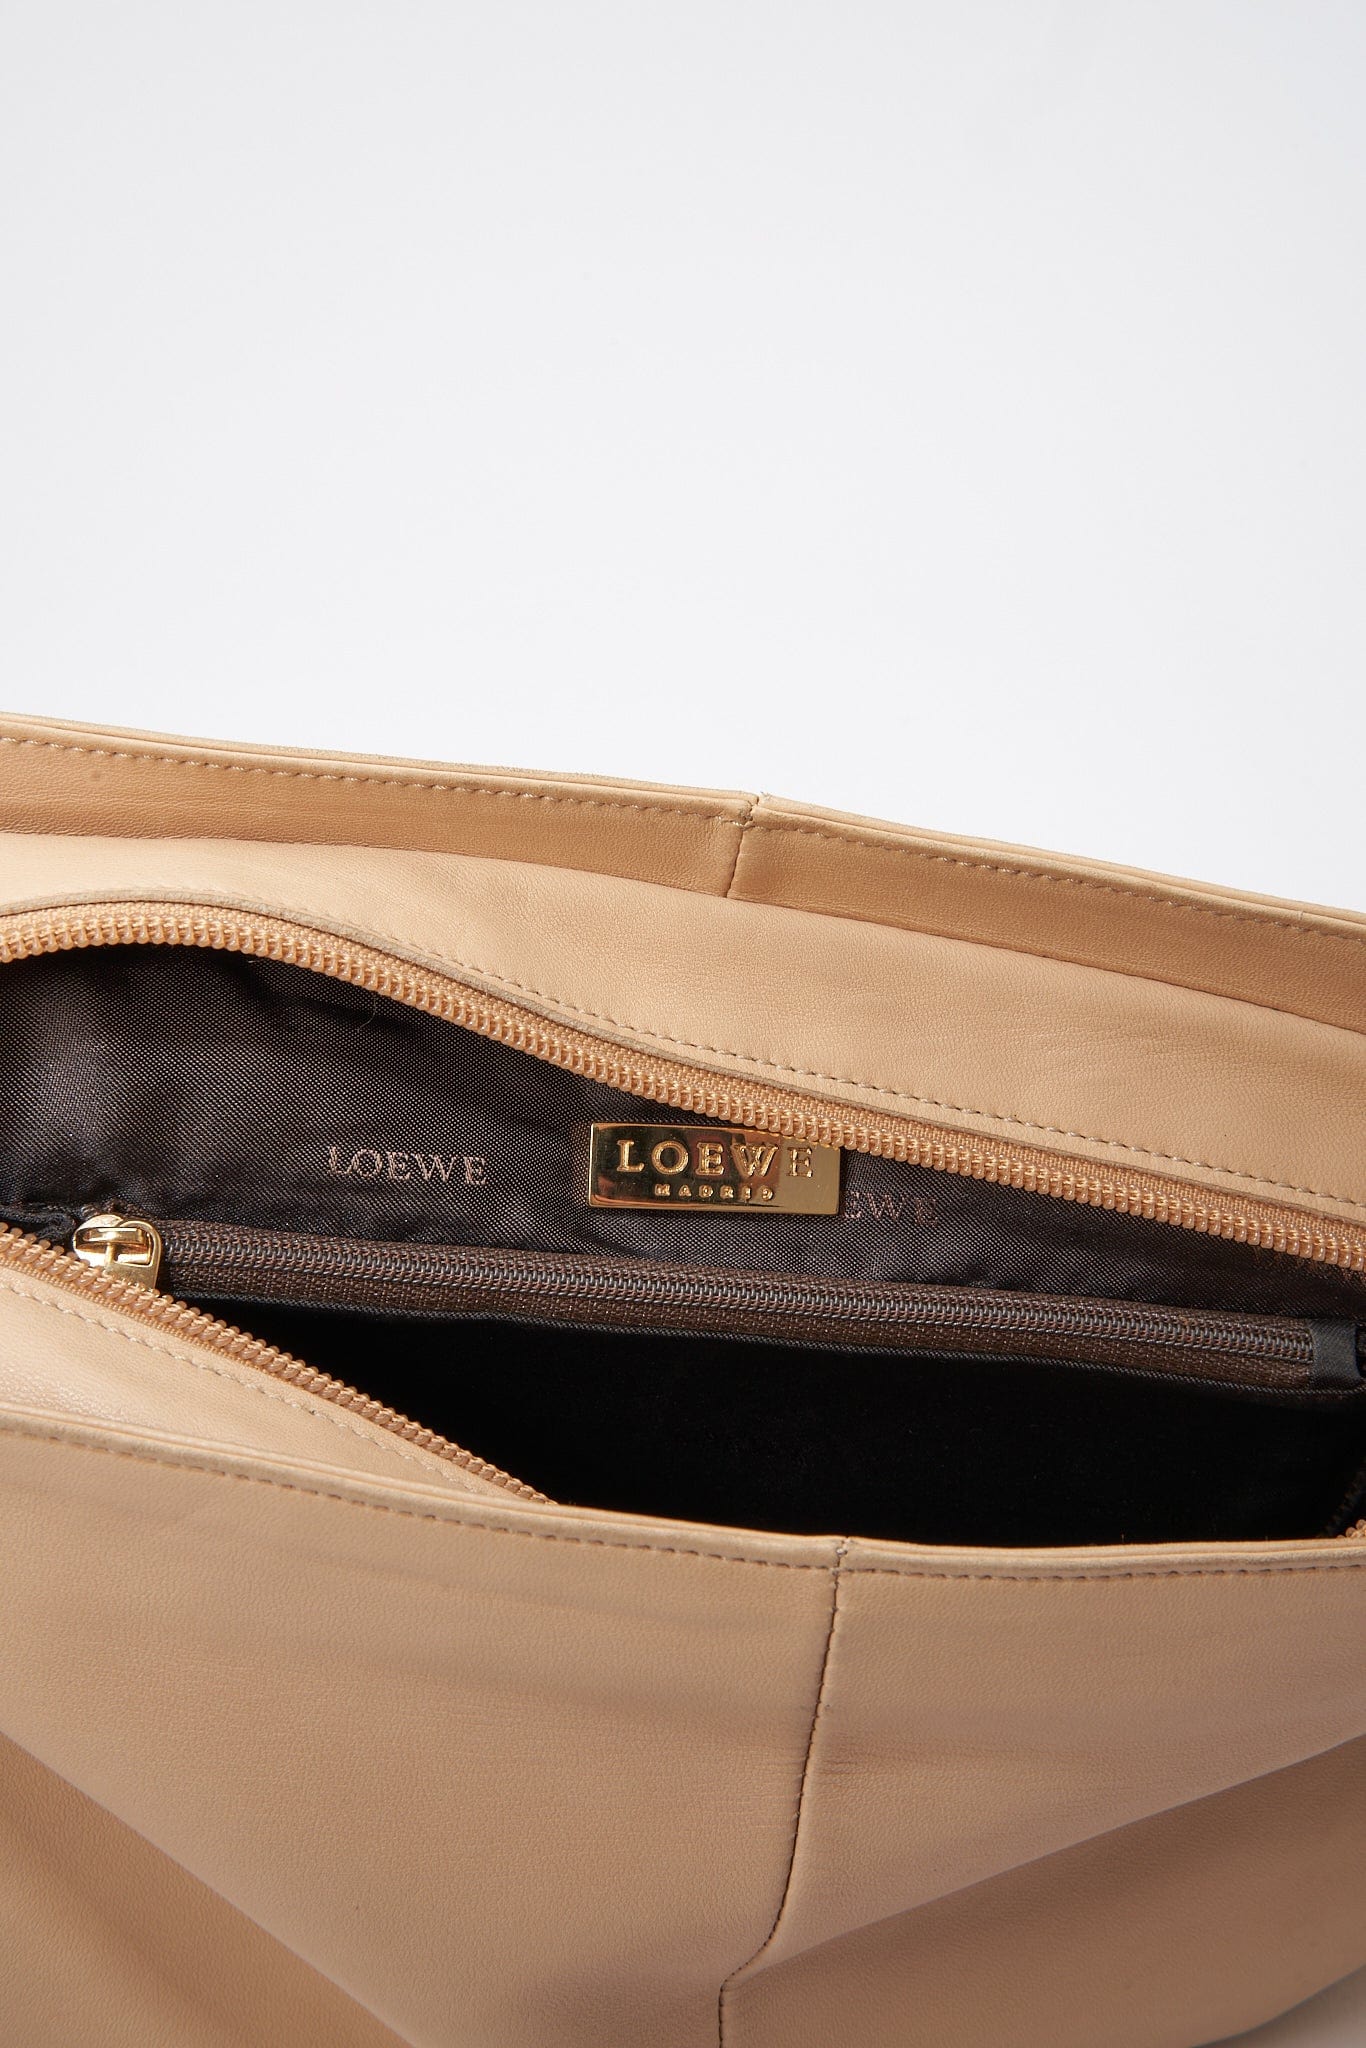 Pre-owned] Loewe gate bag small burgundy/ tan